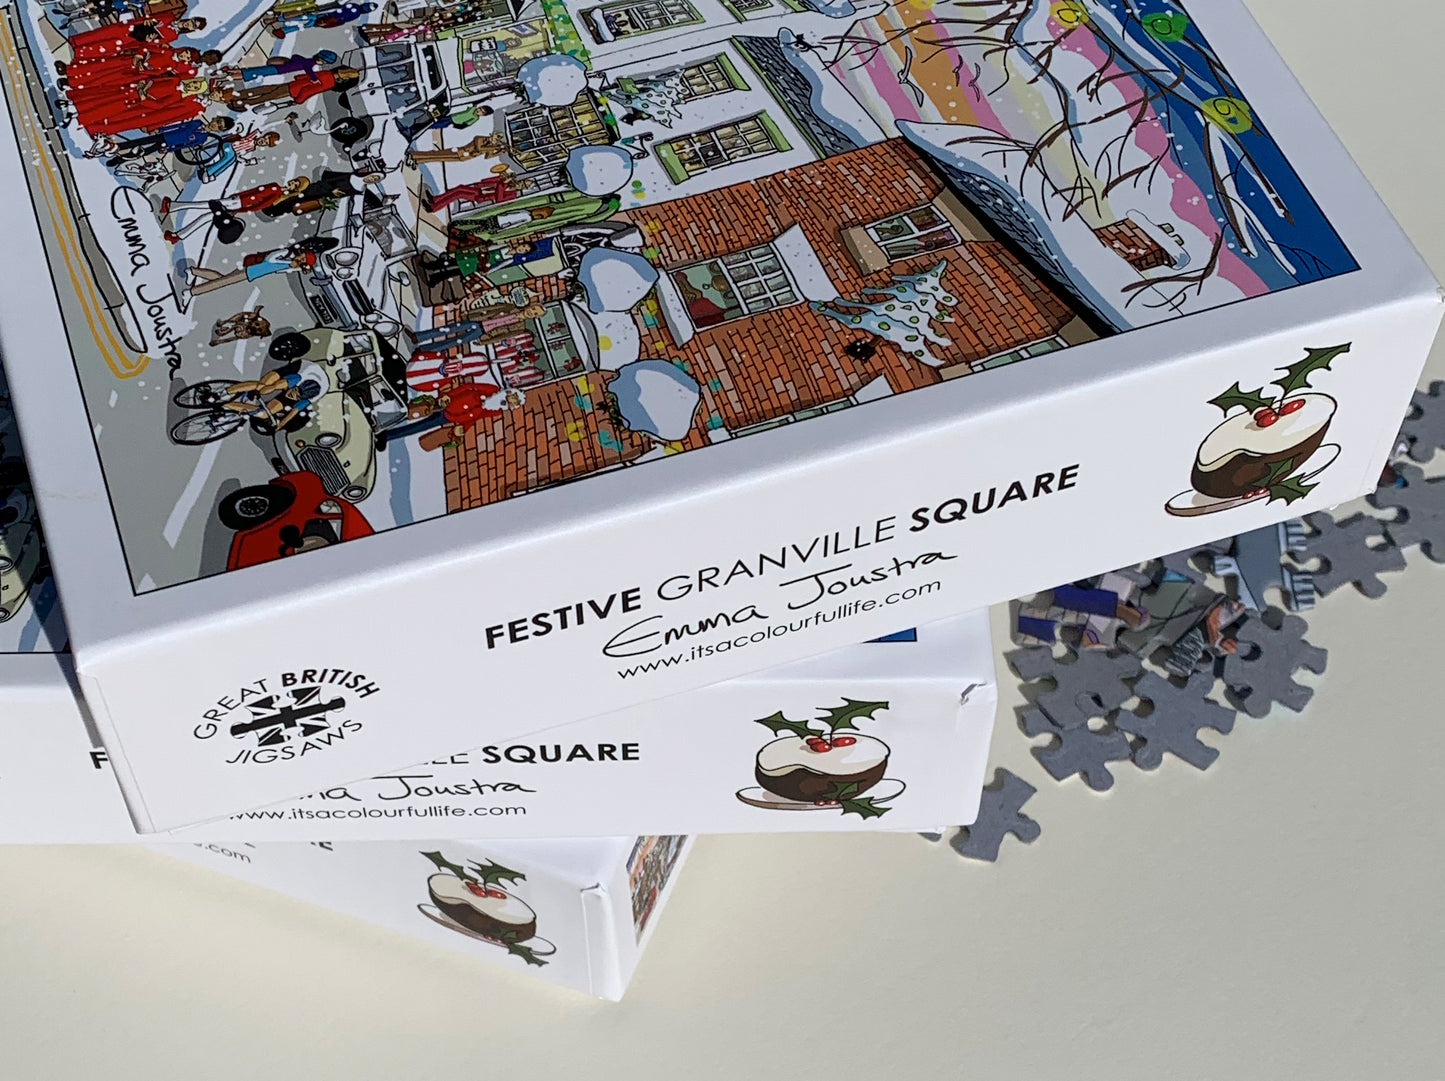 Festive Granville Square 1,000 piece jigsaw puzzle